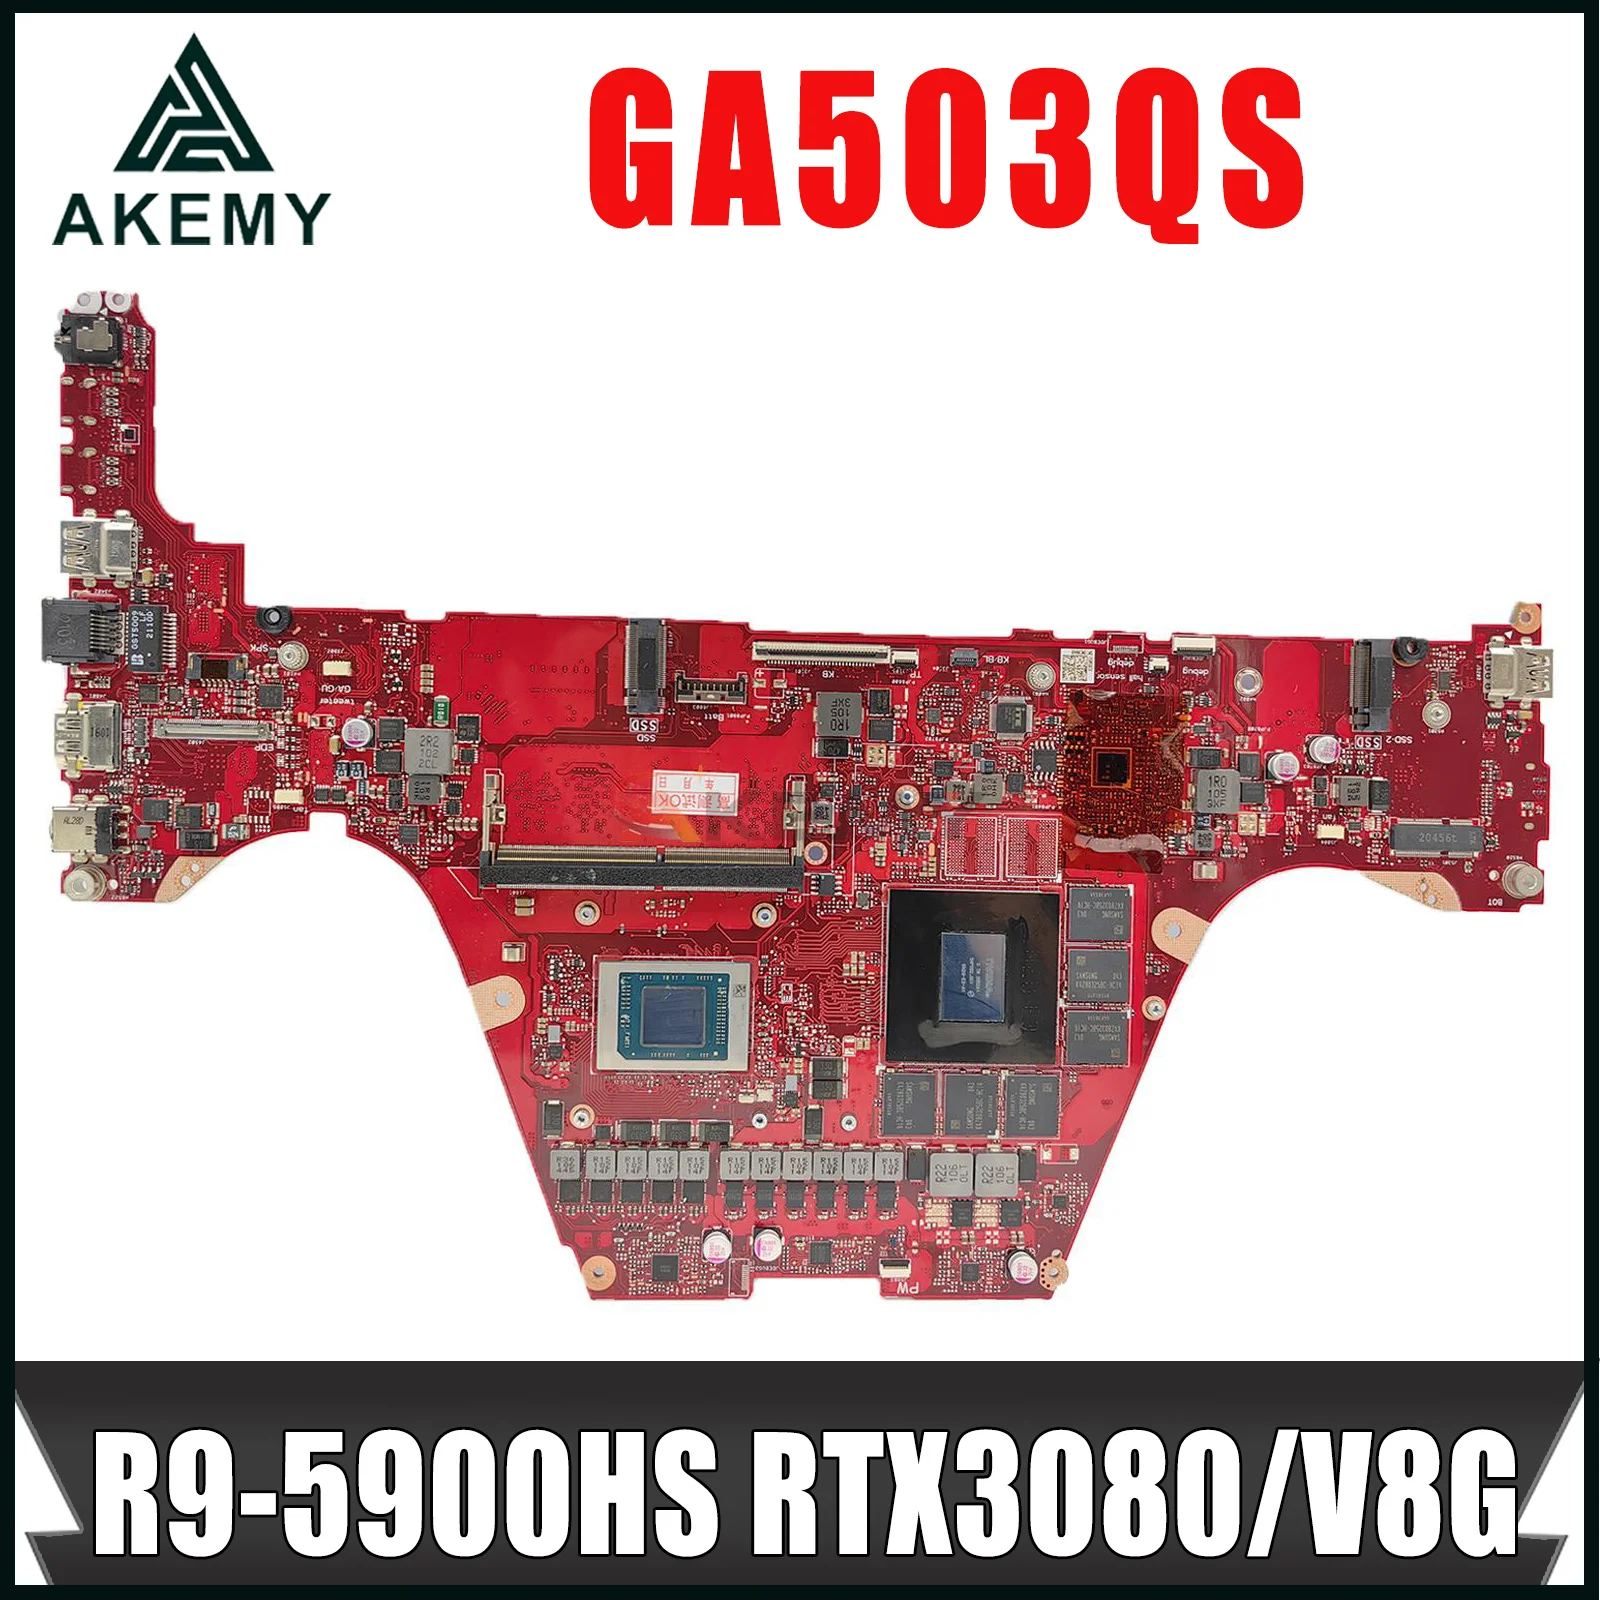 

Ноутбук материнская плата ASUS ROG Zephyrus G15 GA503QS GA503Q, материнская плата ноутбука R9-5900HS RTX3080/V8G 8 ГБ/RAM DDR4